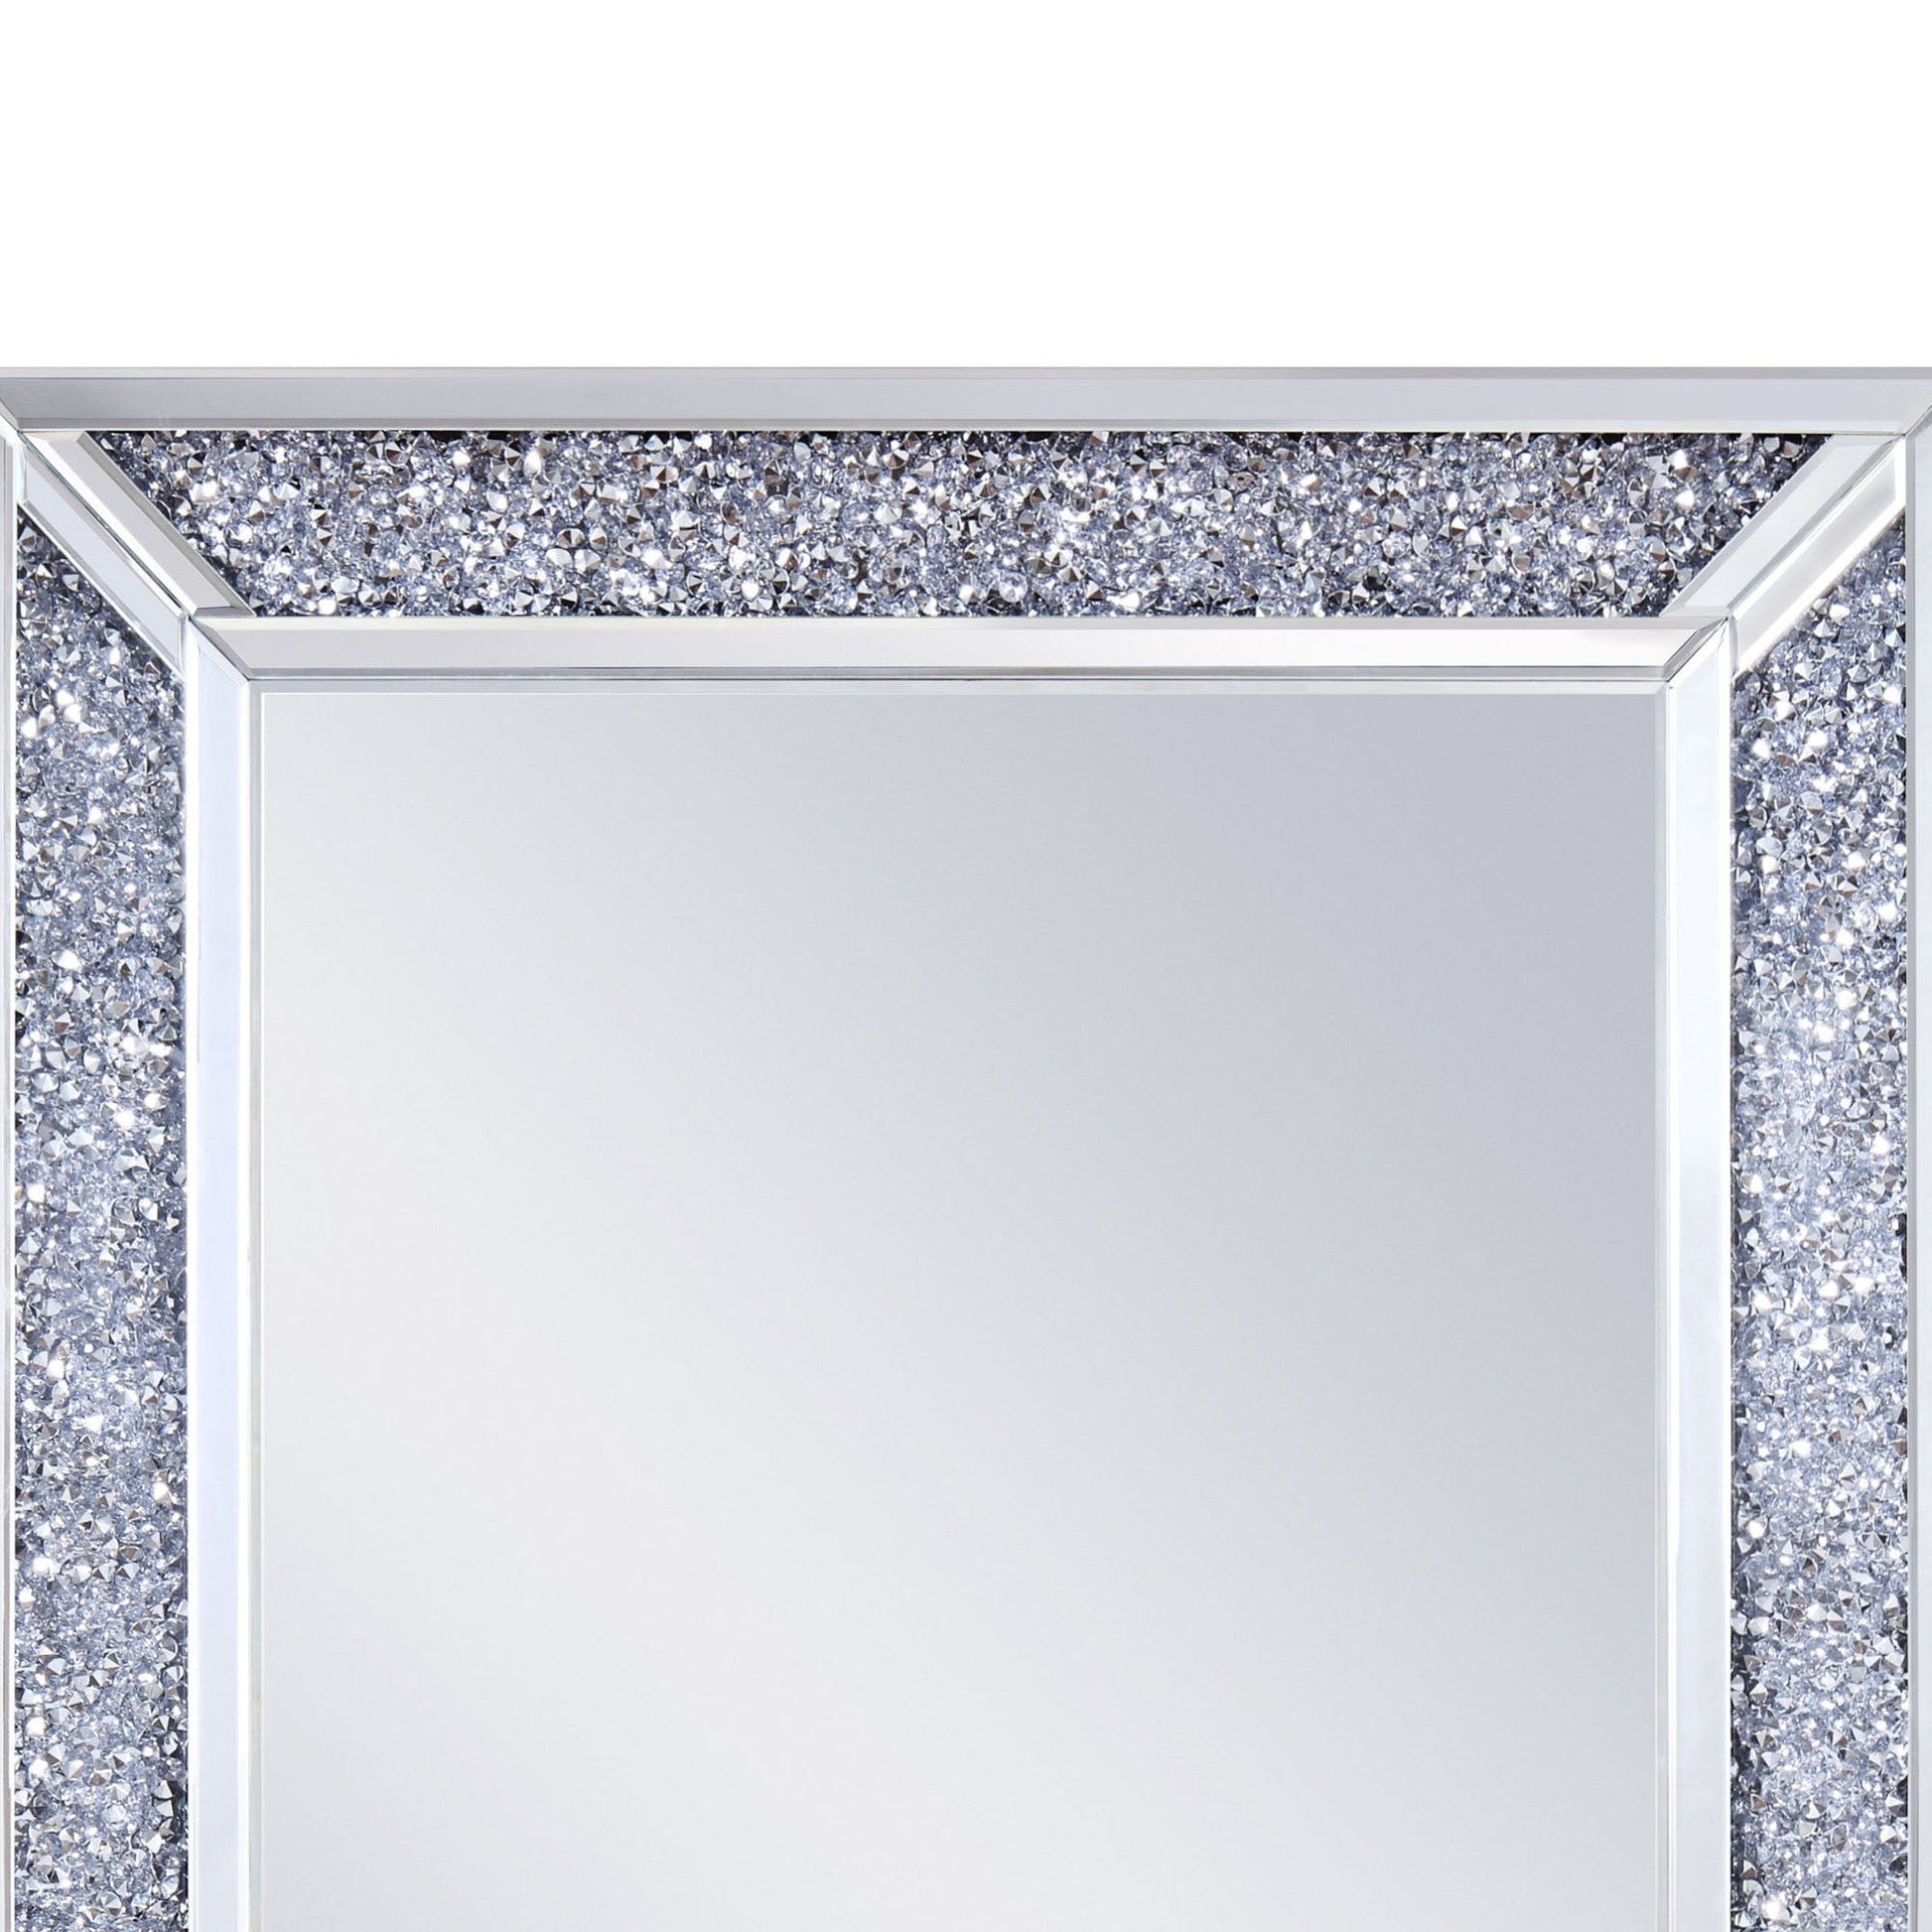 Benzara Silver Rectangular Faux Crystal Inlay Wall Mirror With Mirrored Borders